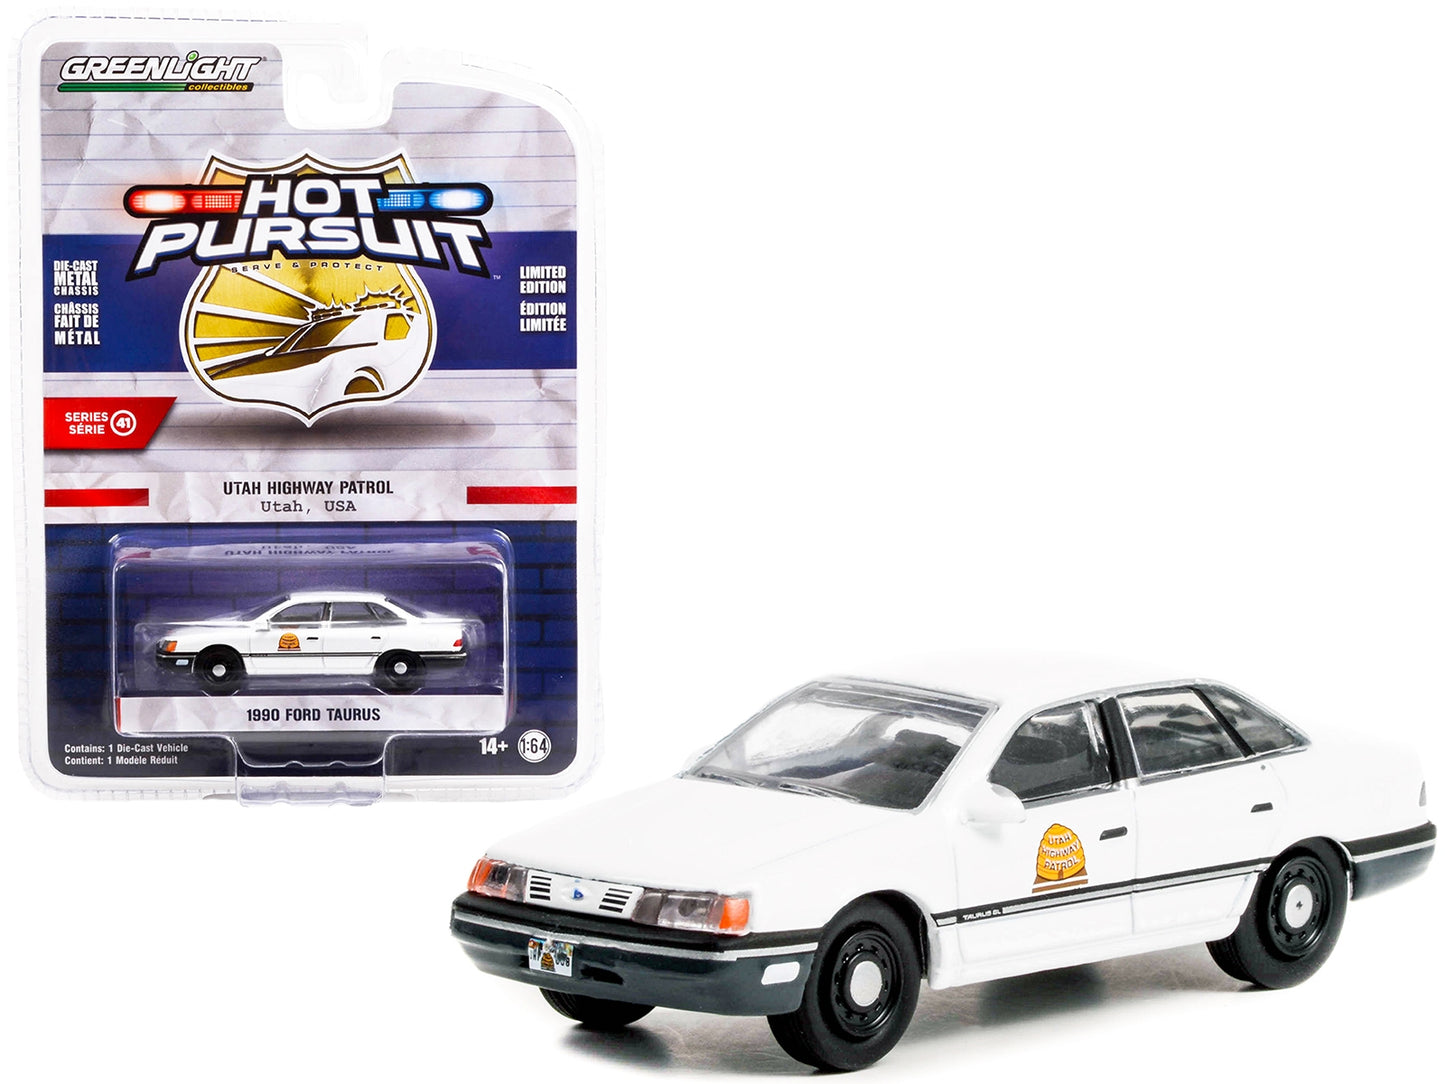 1990 Ford Taurus Police White "Utah Highway Patrol" "Hot Pursuit" Series 41 1/64 Diecast Model Car by Greenlight